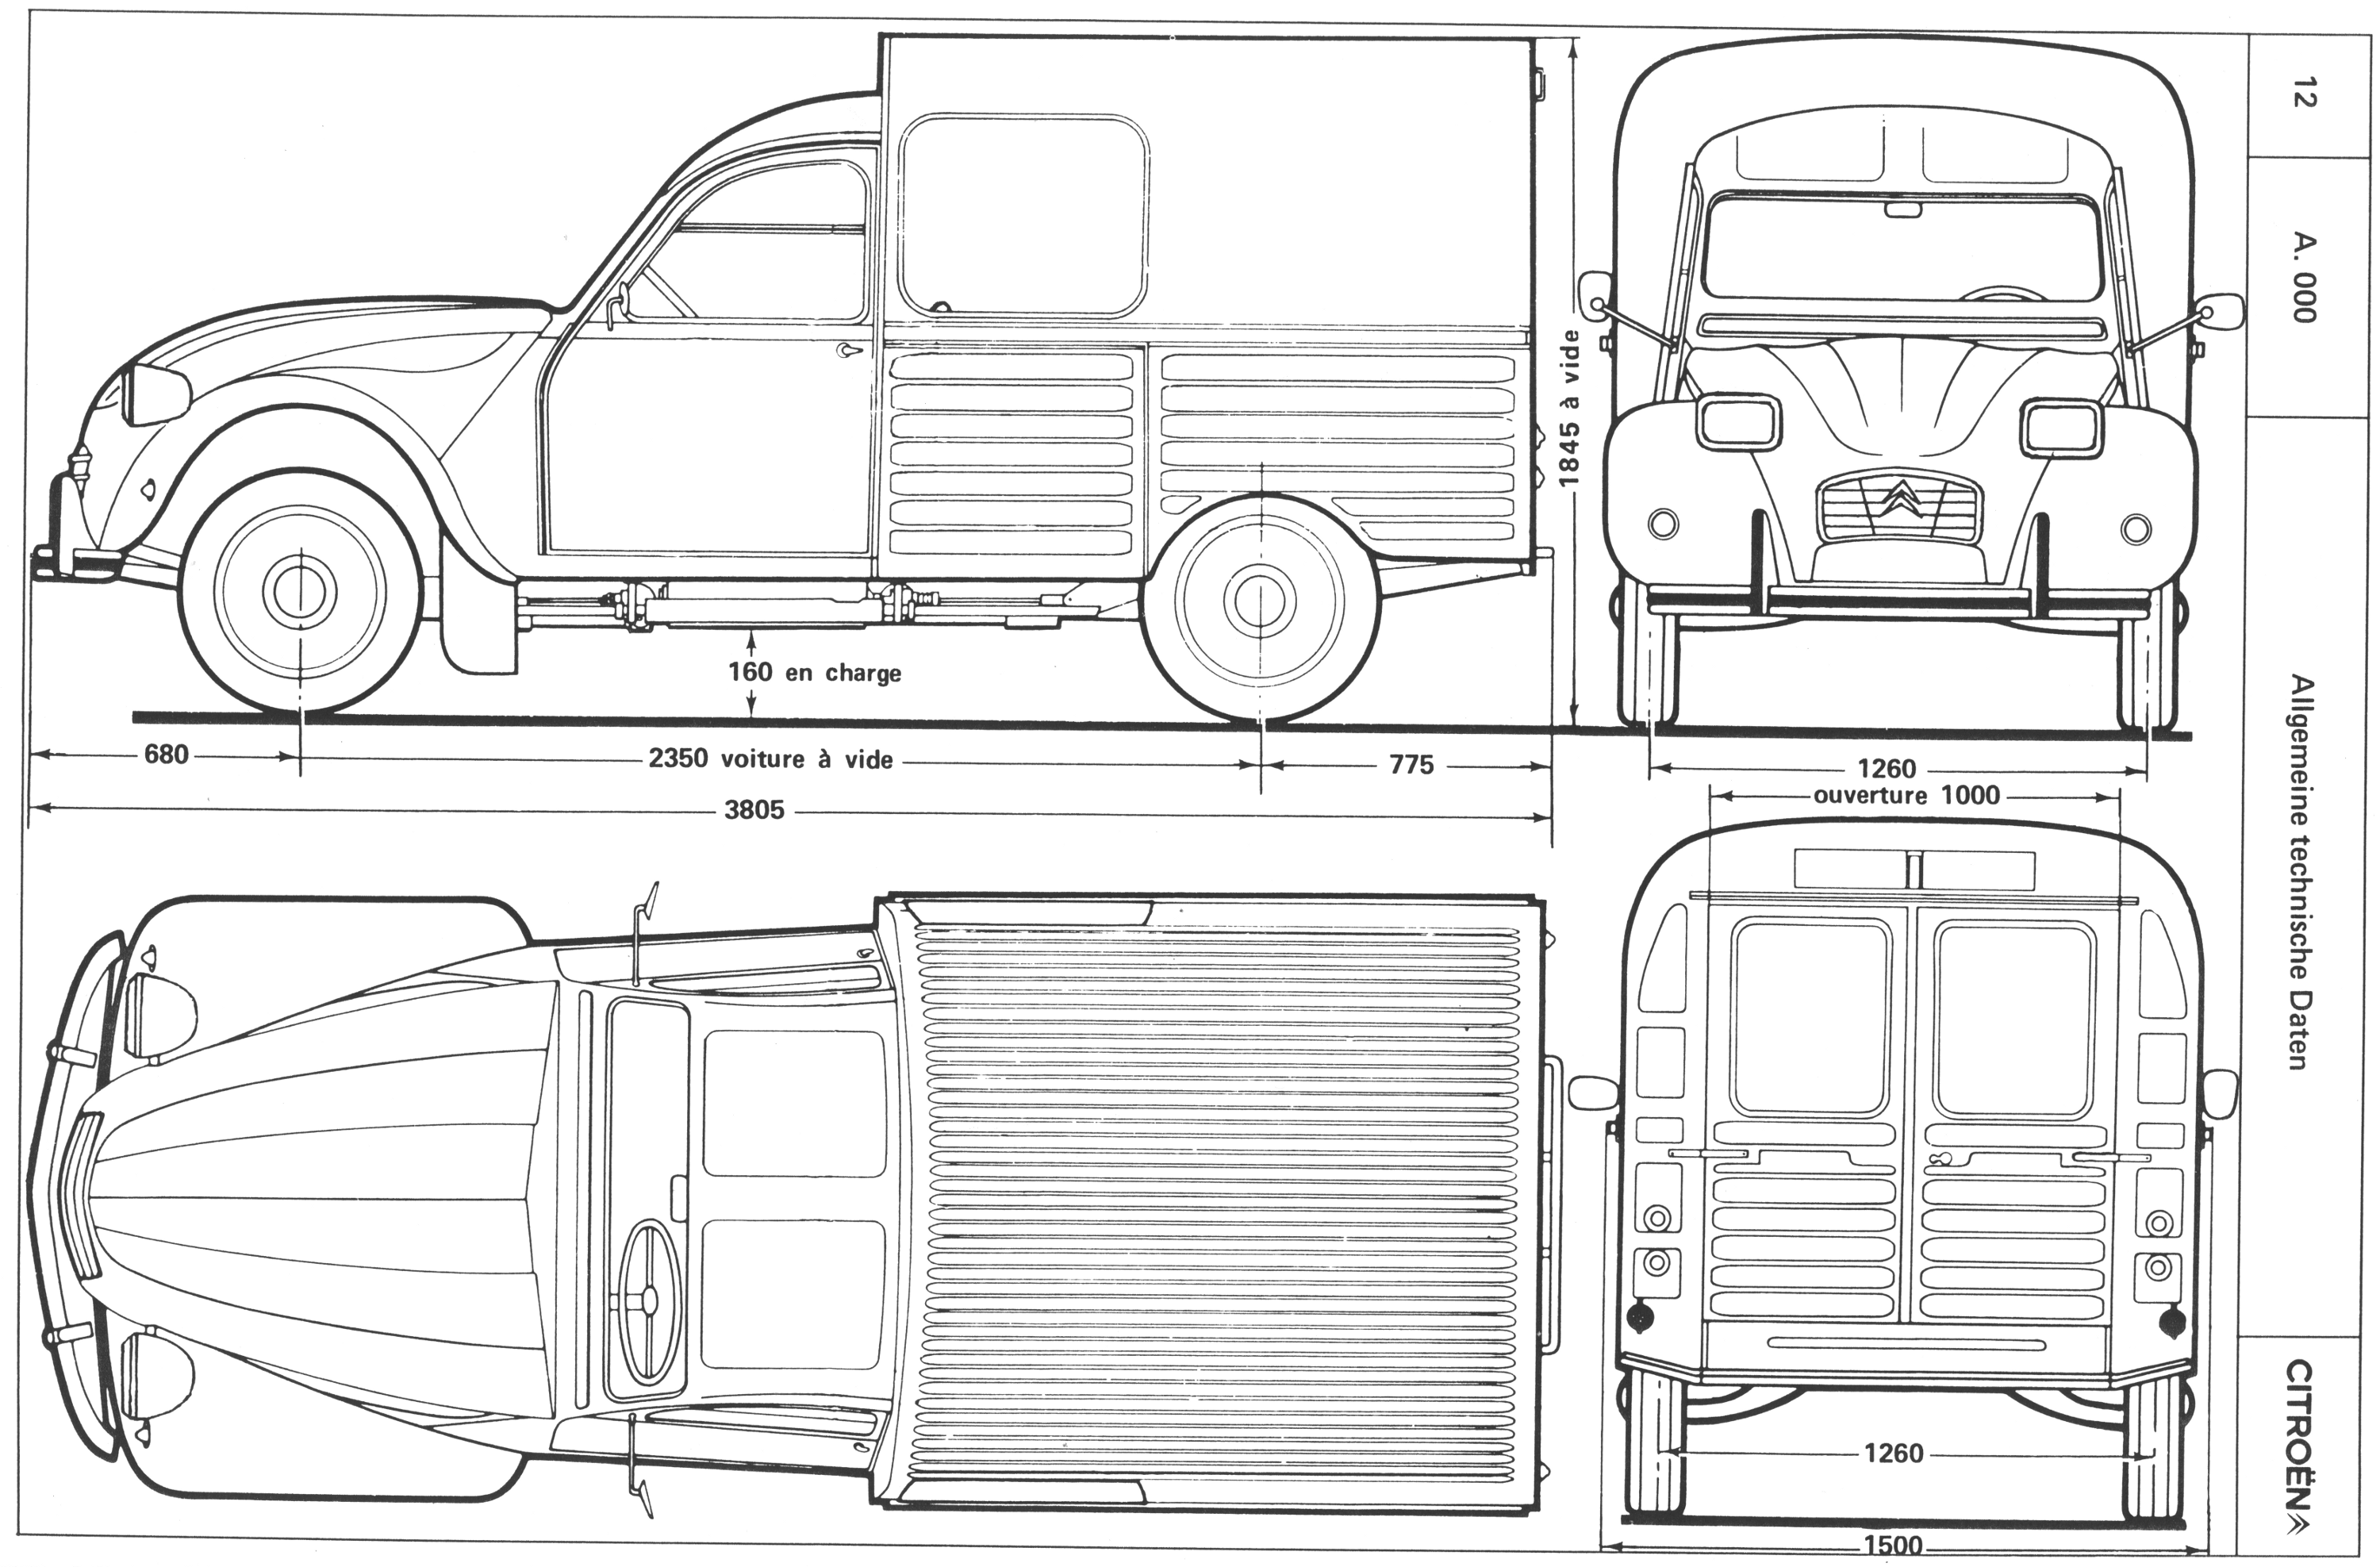 Citroën AK 400 blueprint